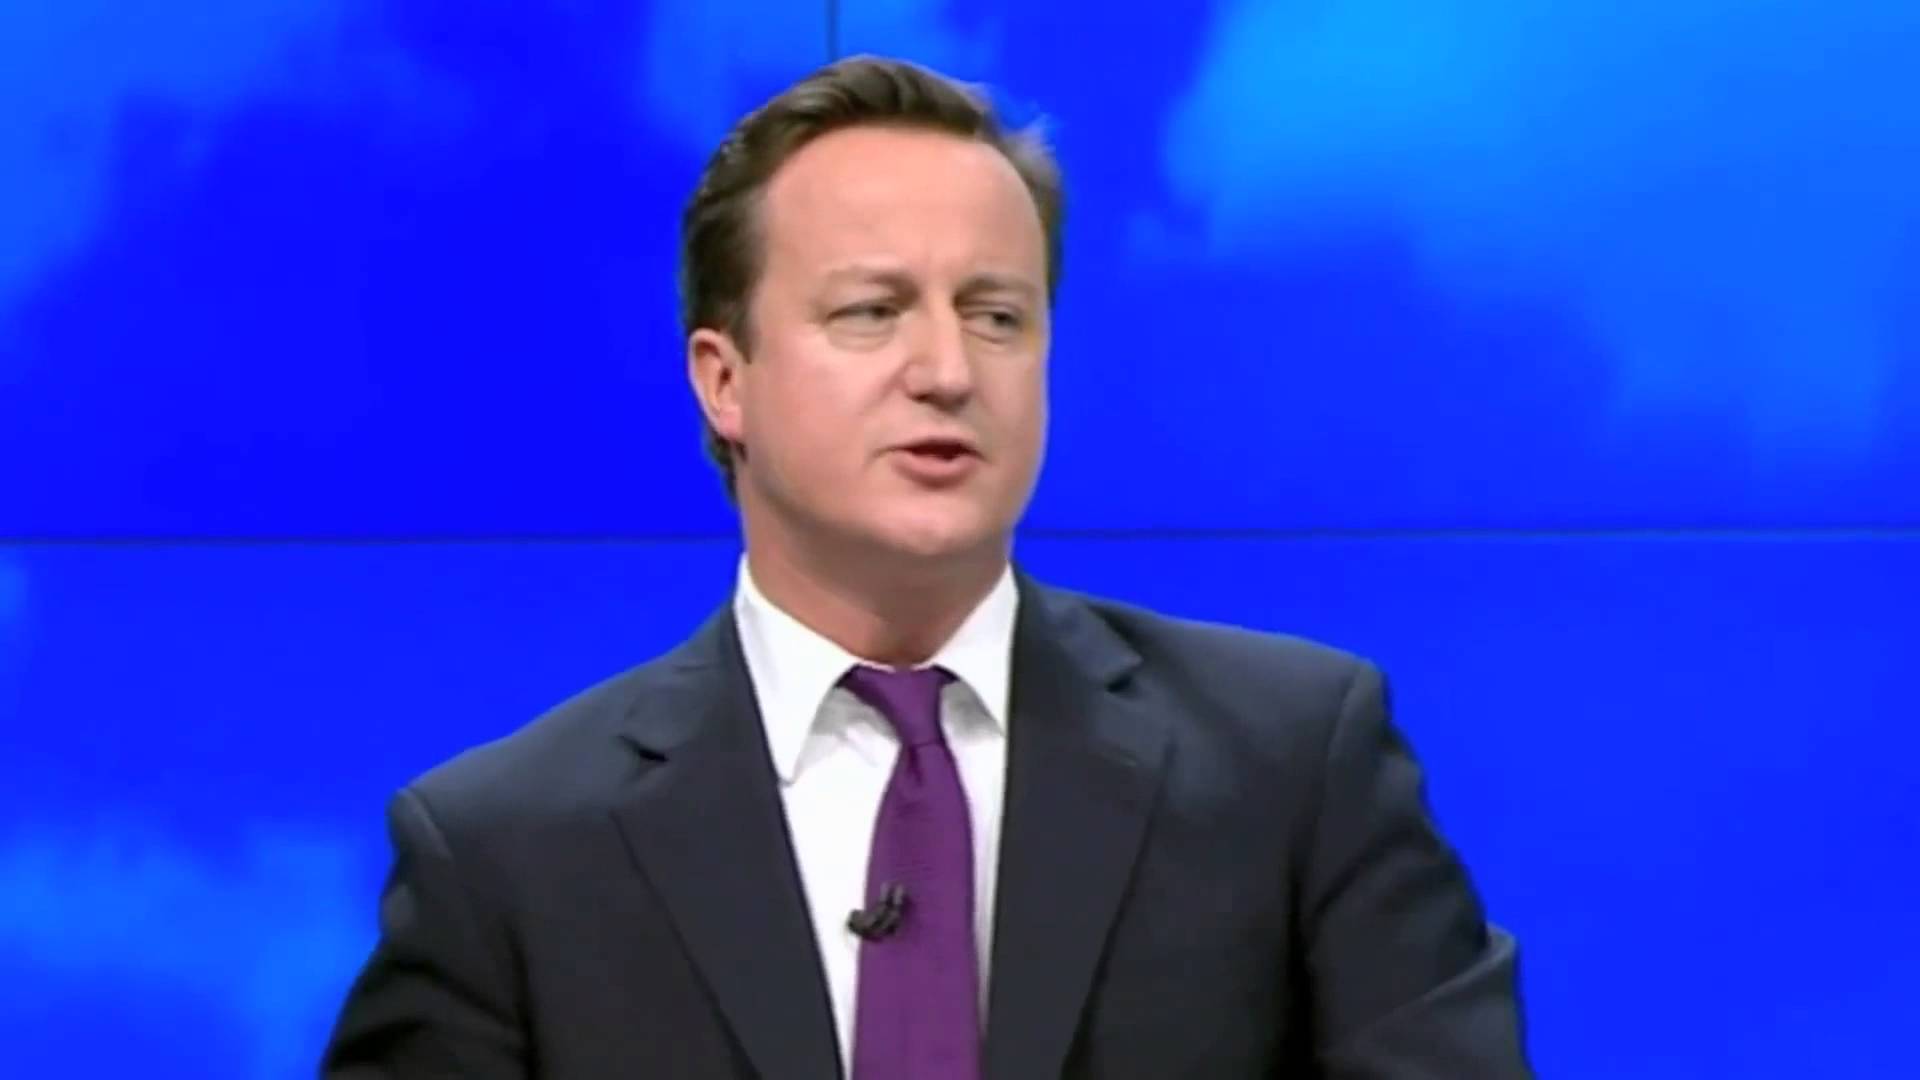 Potere gay: Cameron impone quote LGBT alla Bbc 1